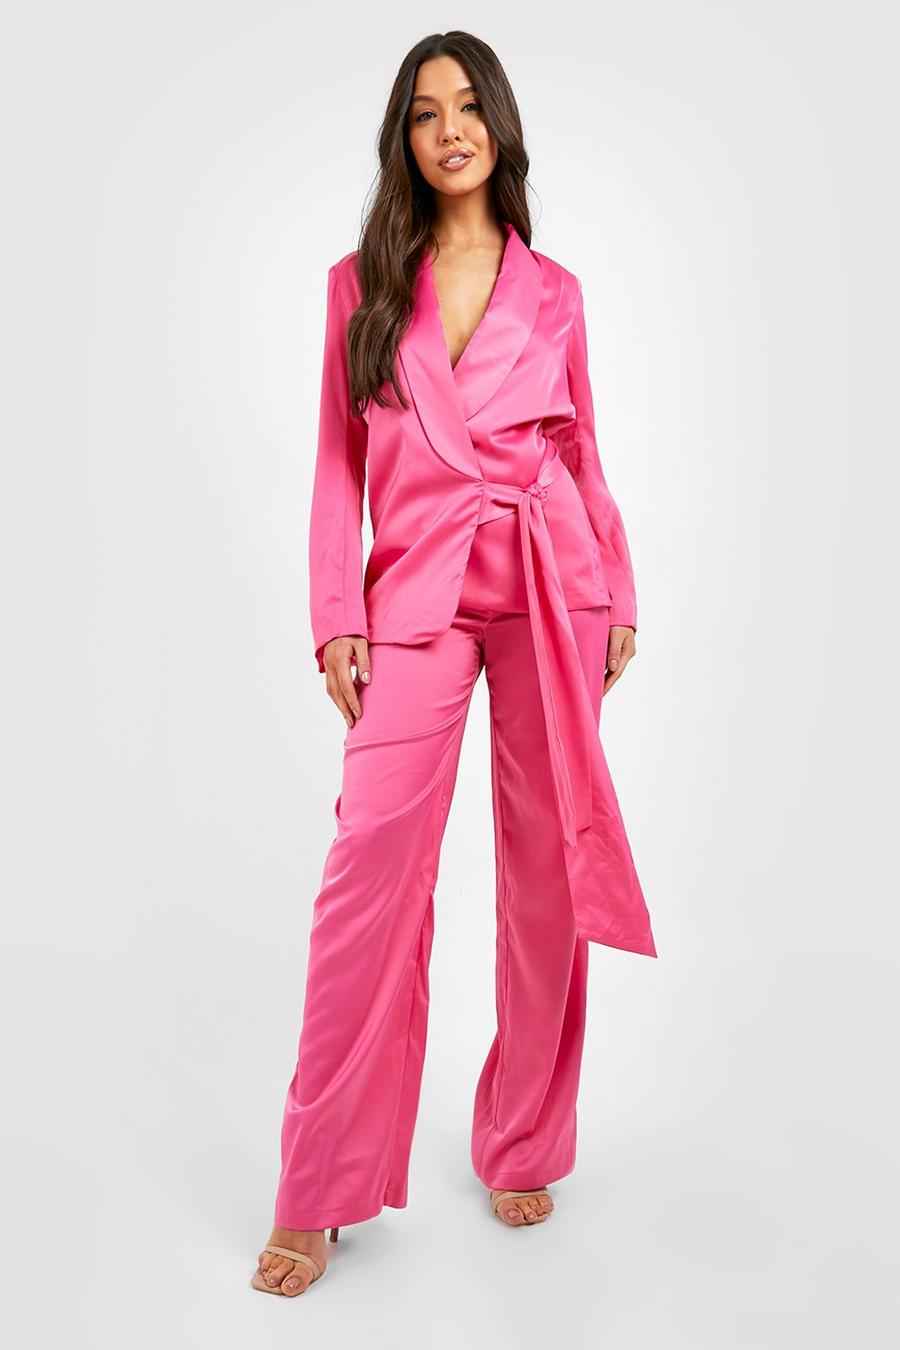 Women's Stretch Satin Tuxedo Pants - Hot Pink - Shebby Designer Clothing